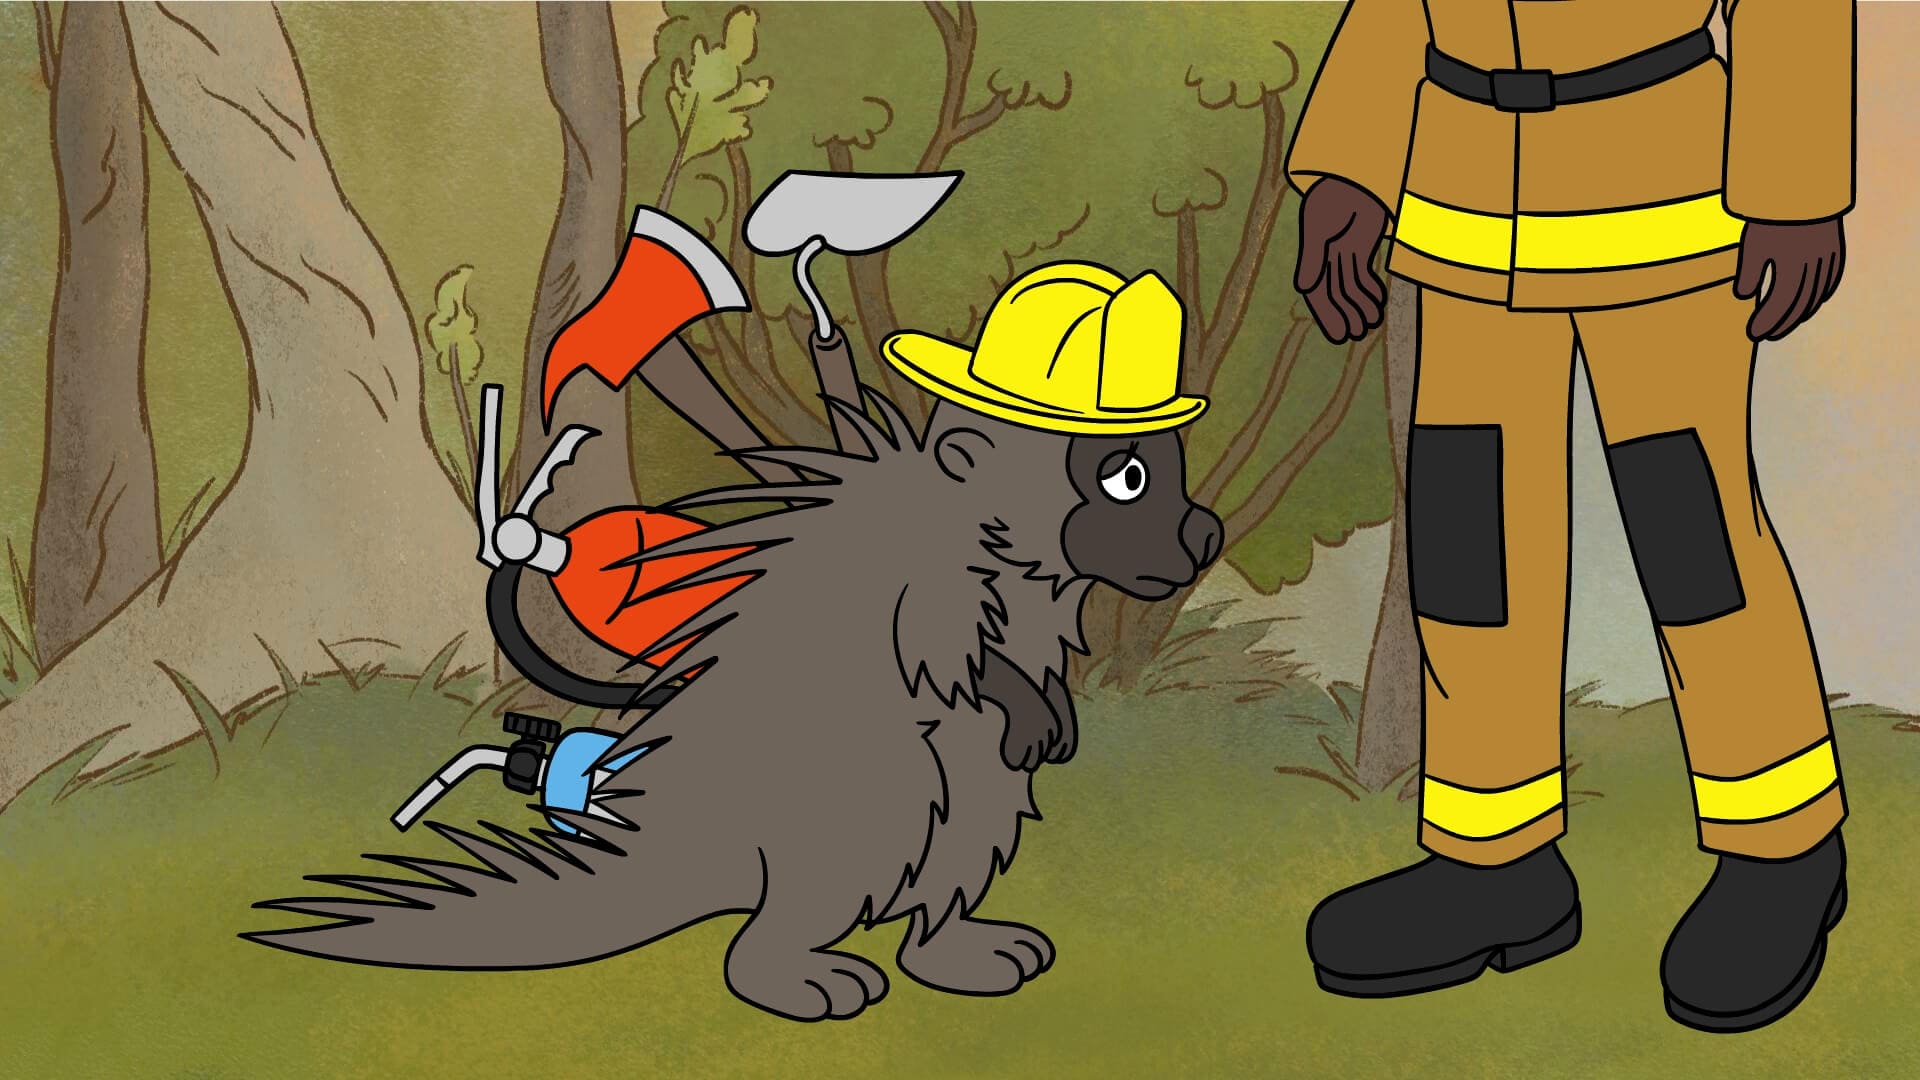 porcupine with fireman tools